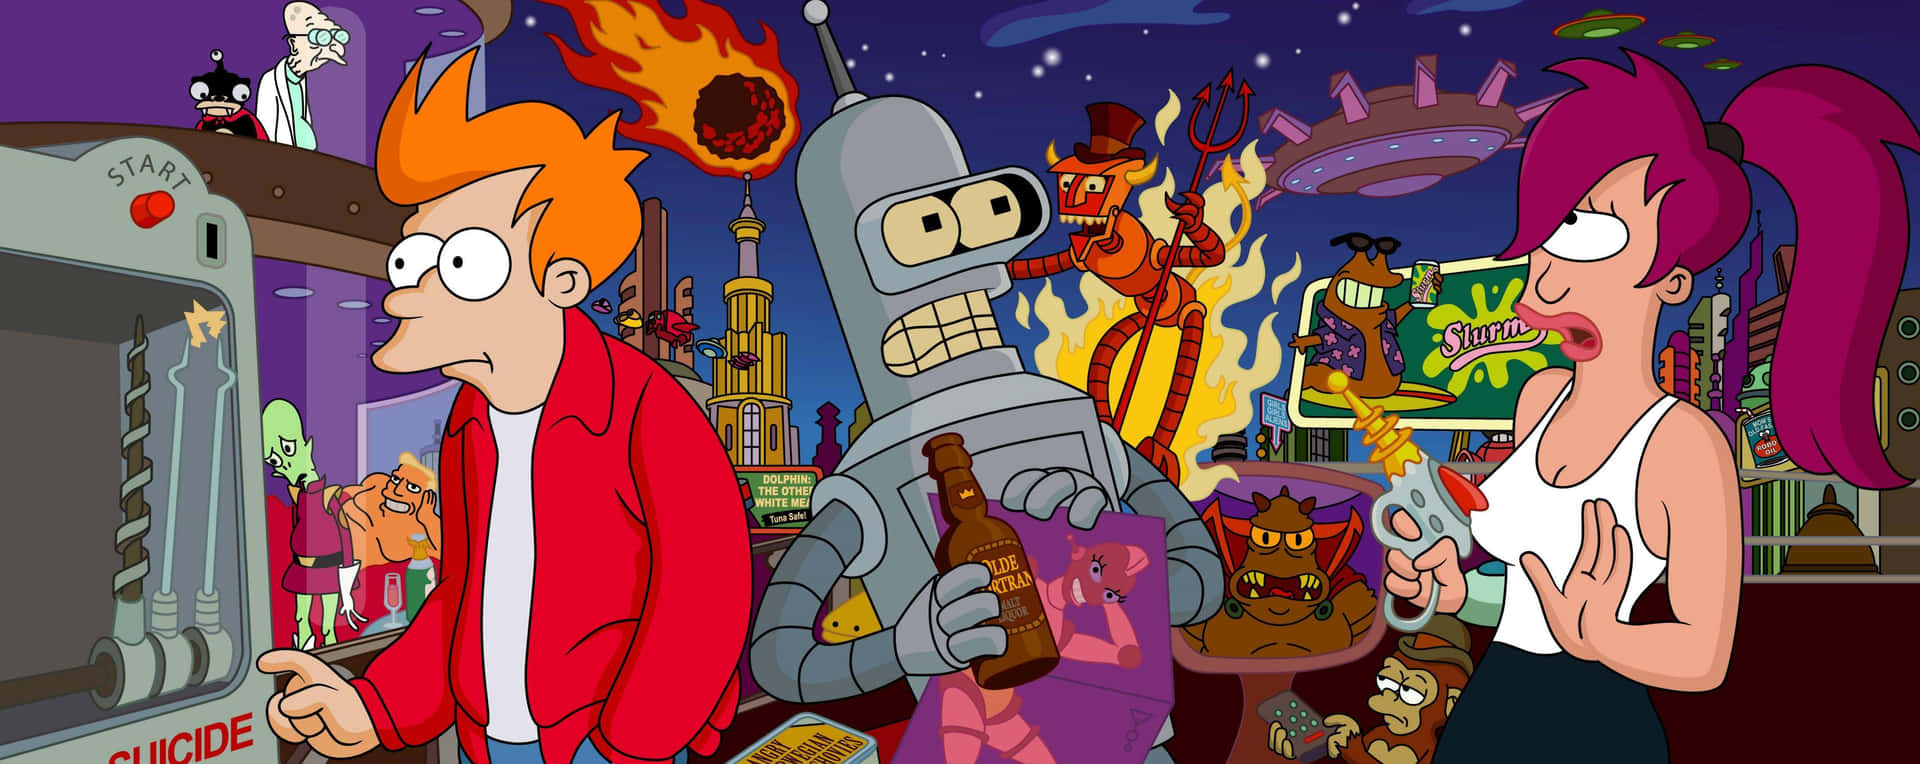 Futurama crew in an otherworldly city